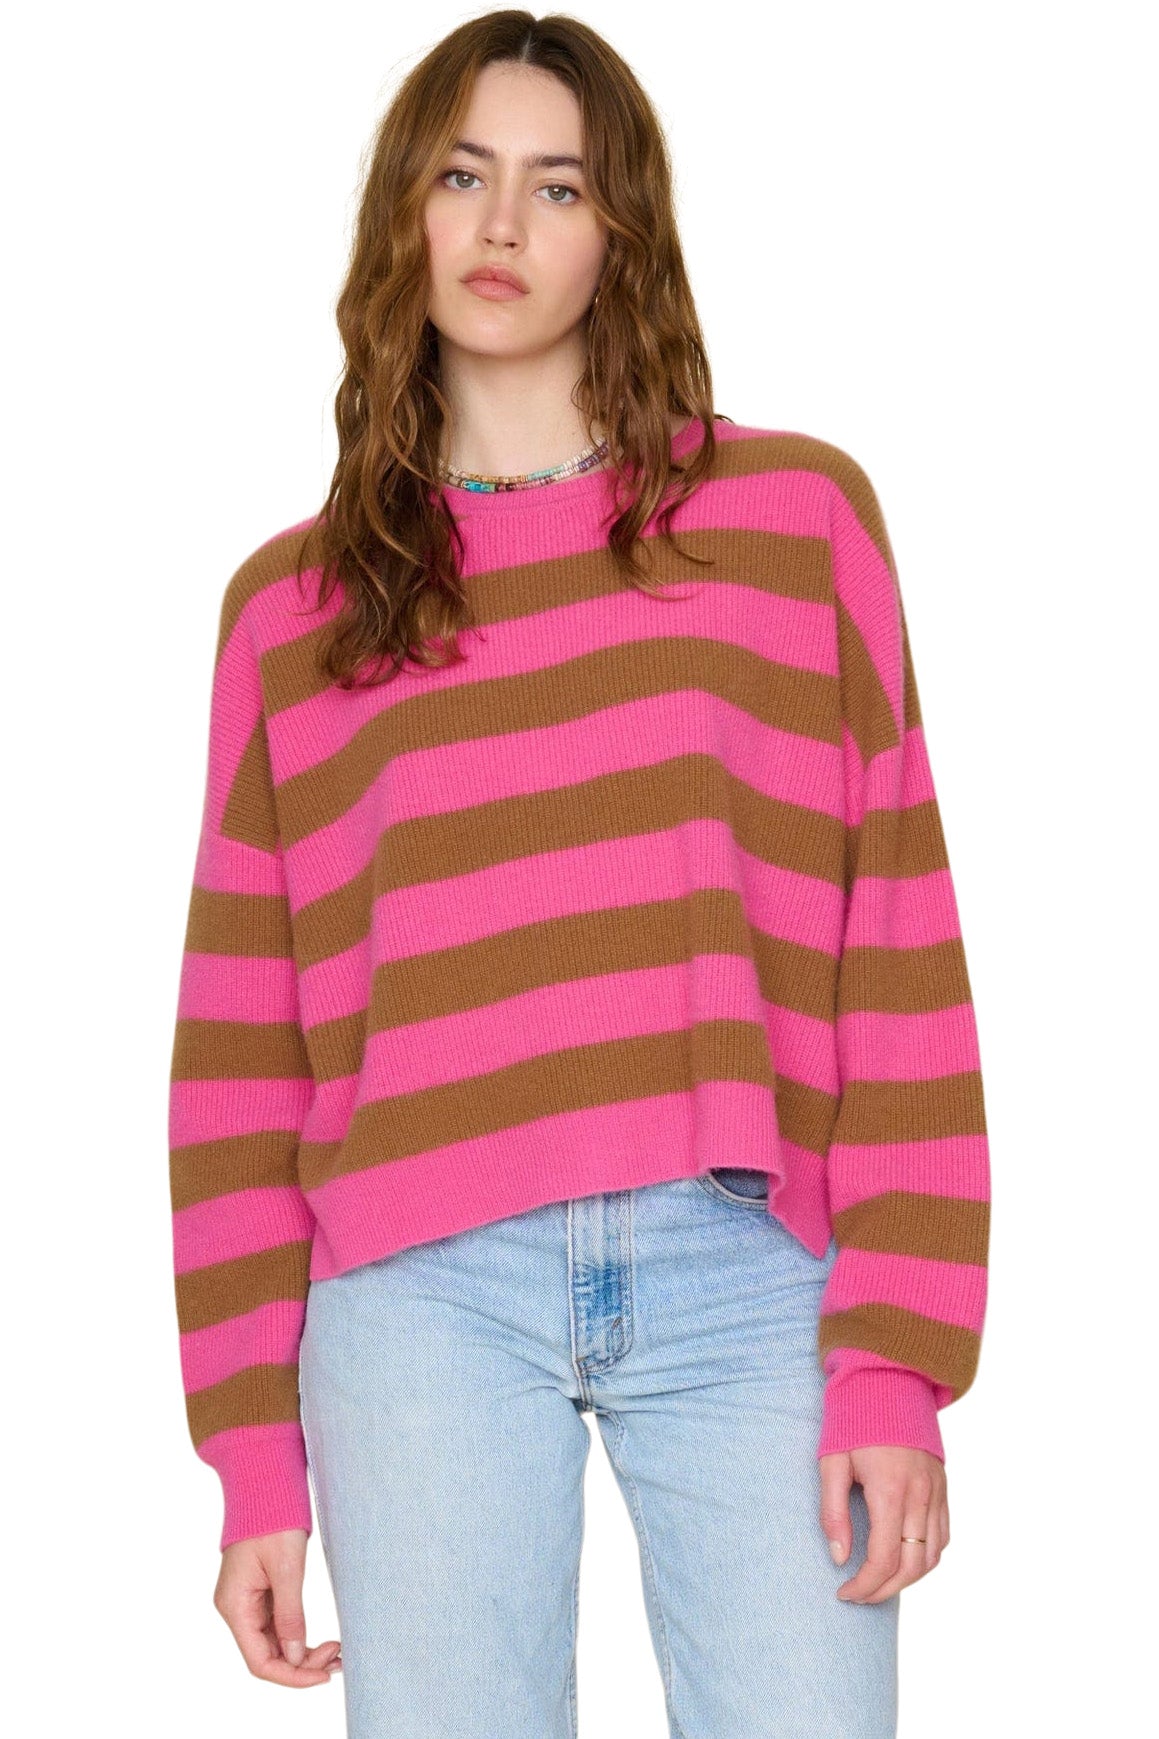 Xirena Coco Cashmere Sweater in Berry Tart